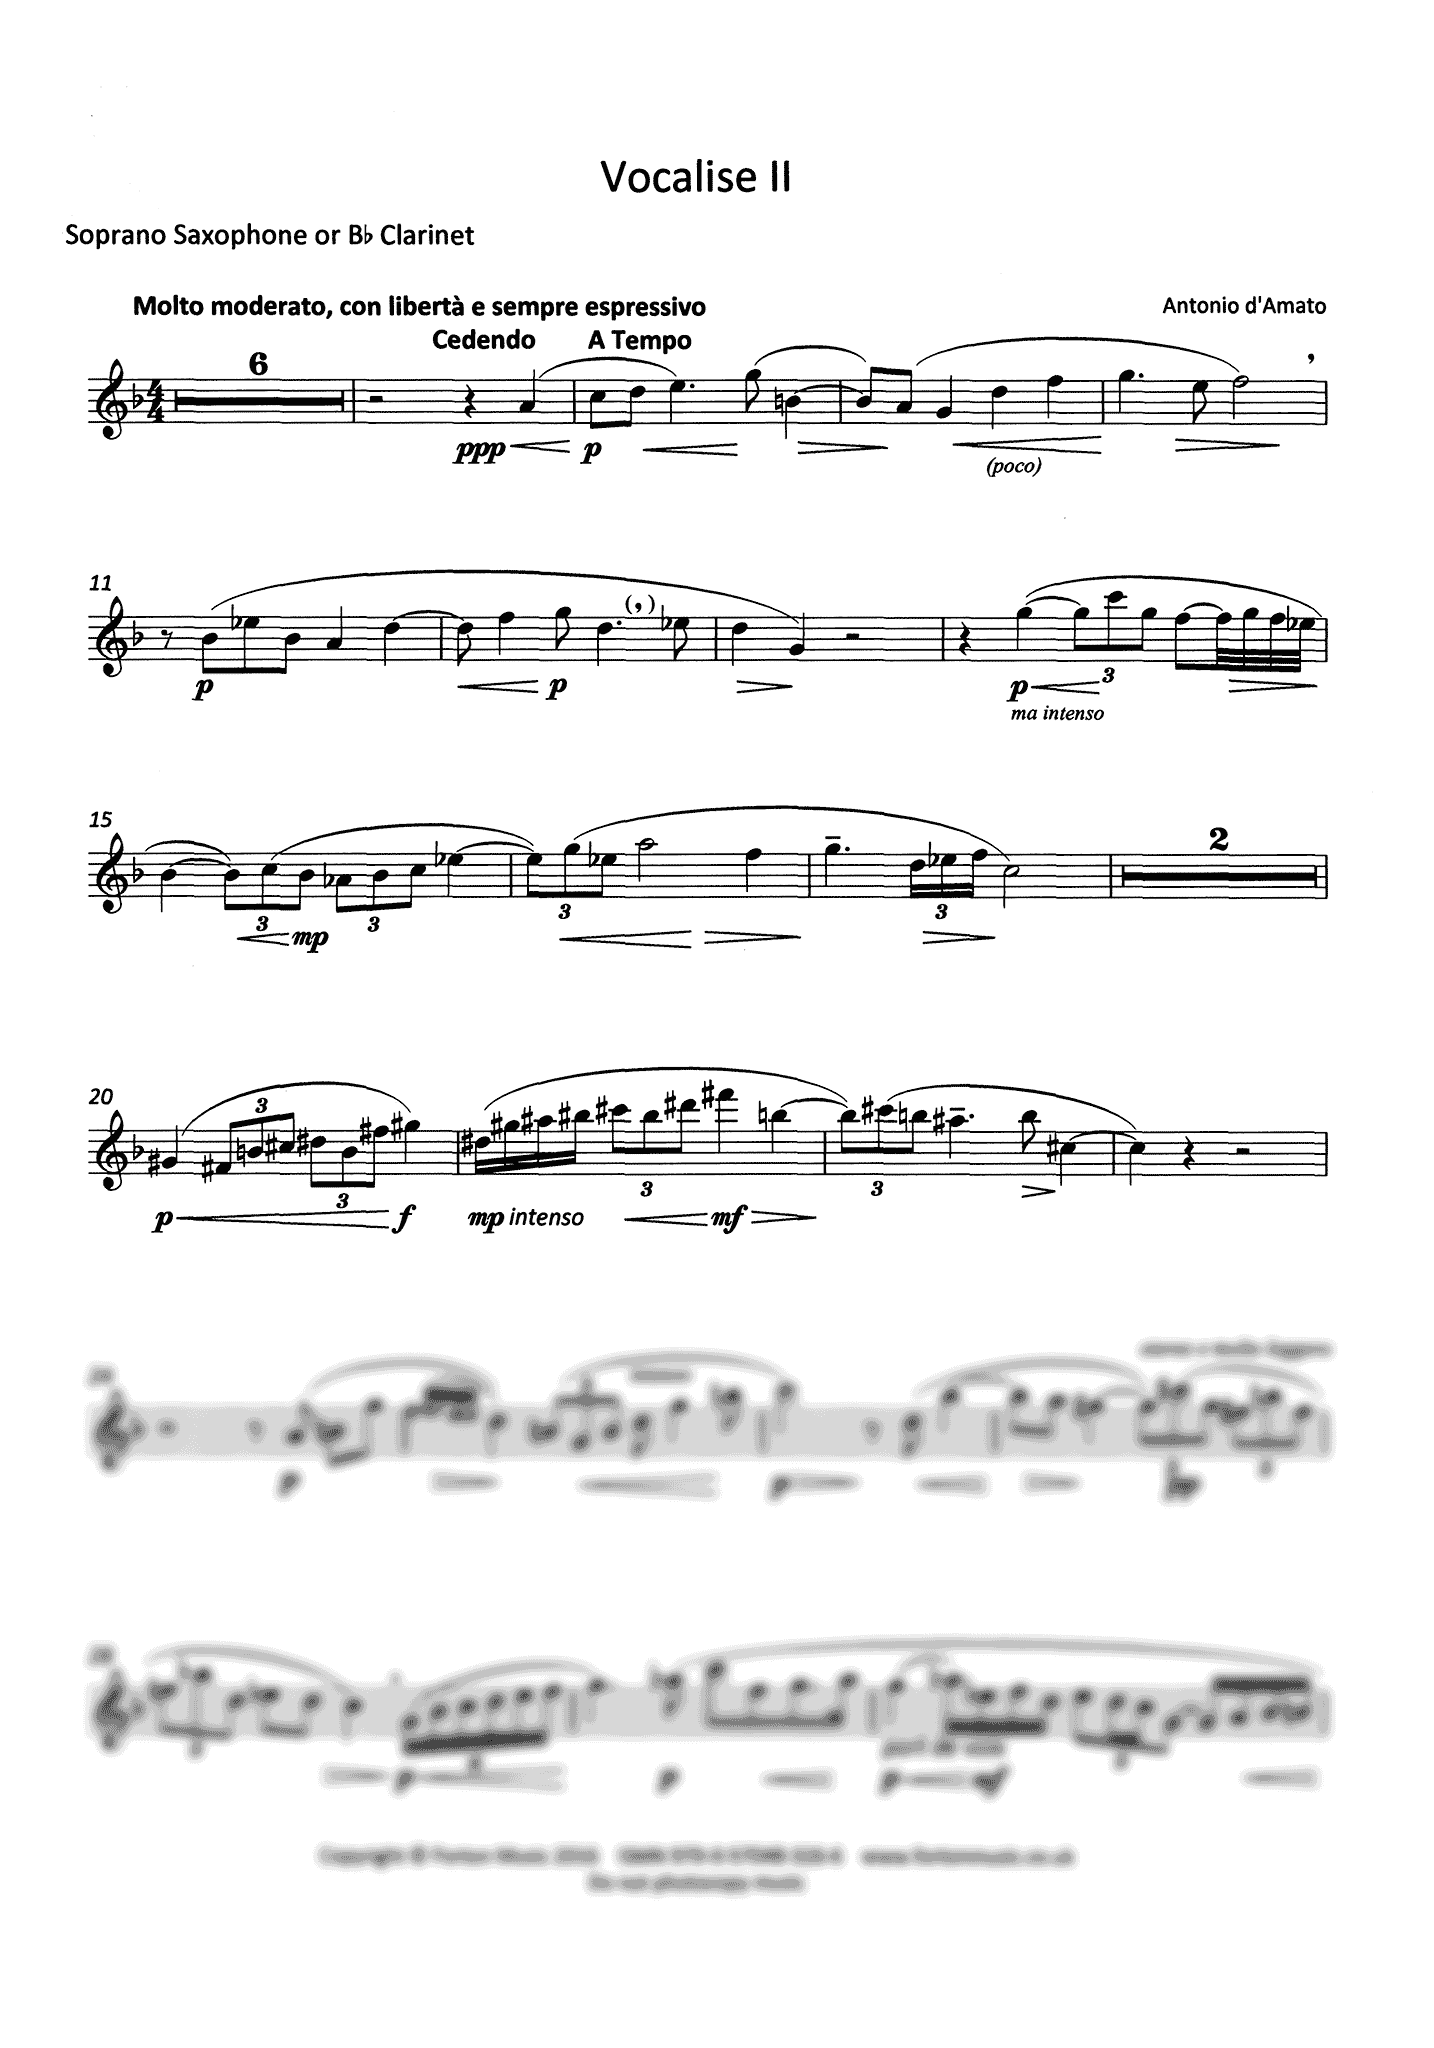 Antonio d"Amato Vocalise No. 2 for clarinet and piano solo part